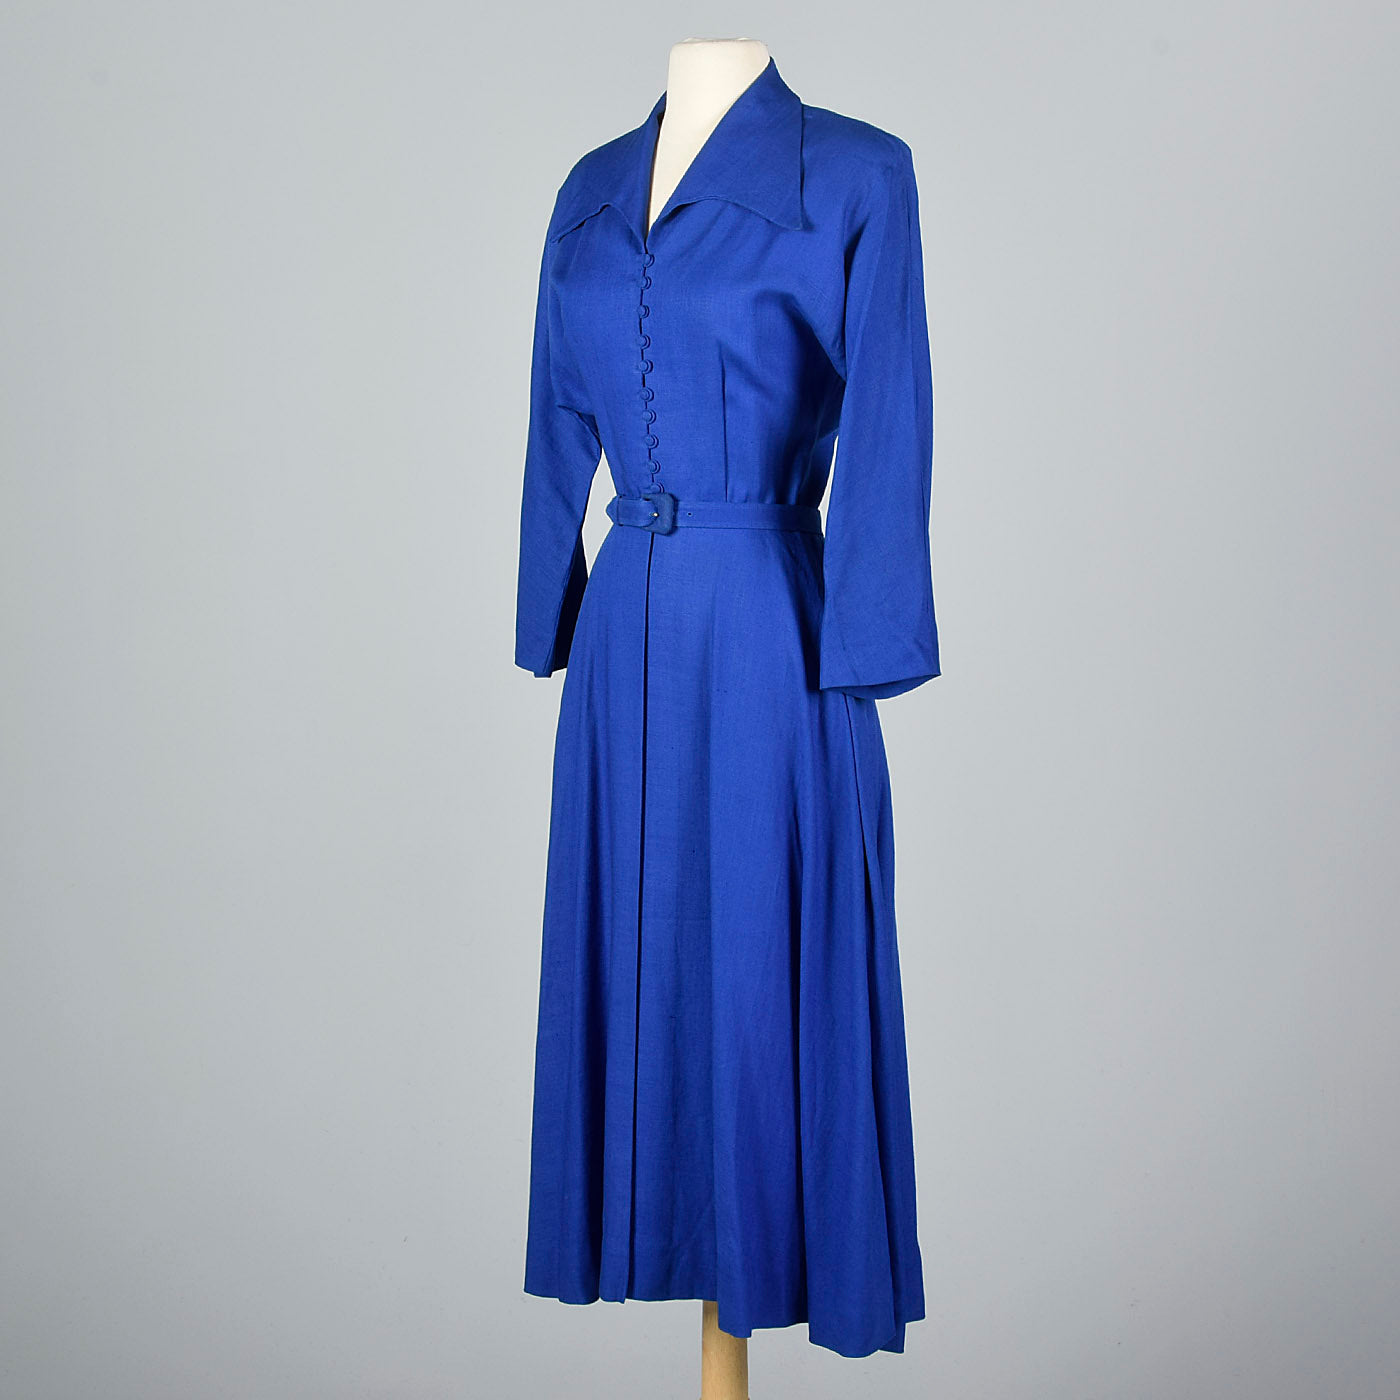 1950s Royal Blue Dress Jacket